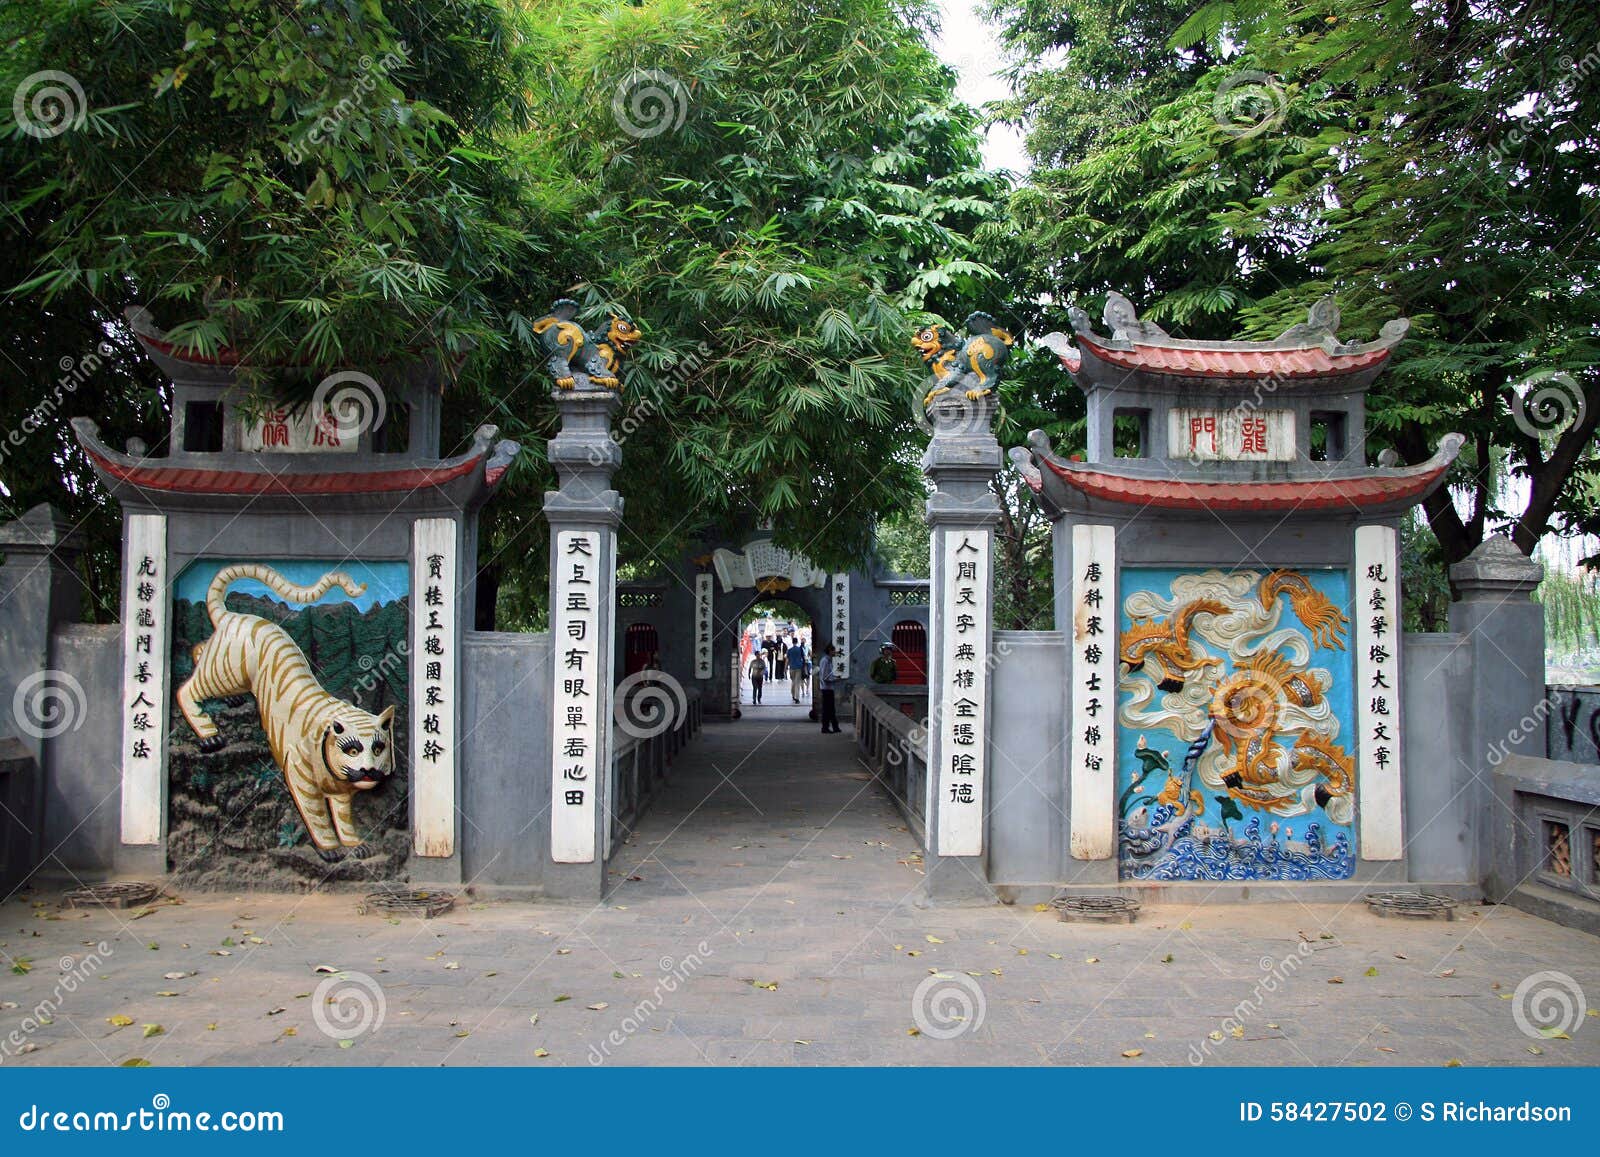 gateway to the huc bridge and ngoc son temple, hoan kiem lake, hanoi